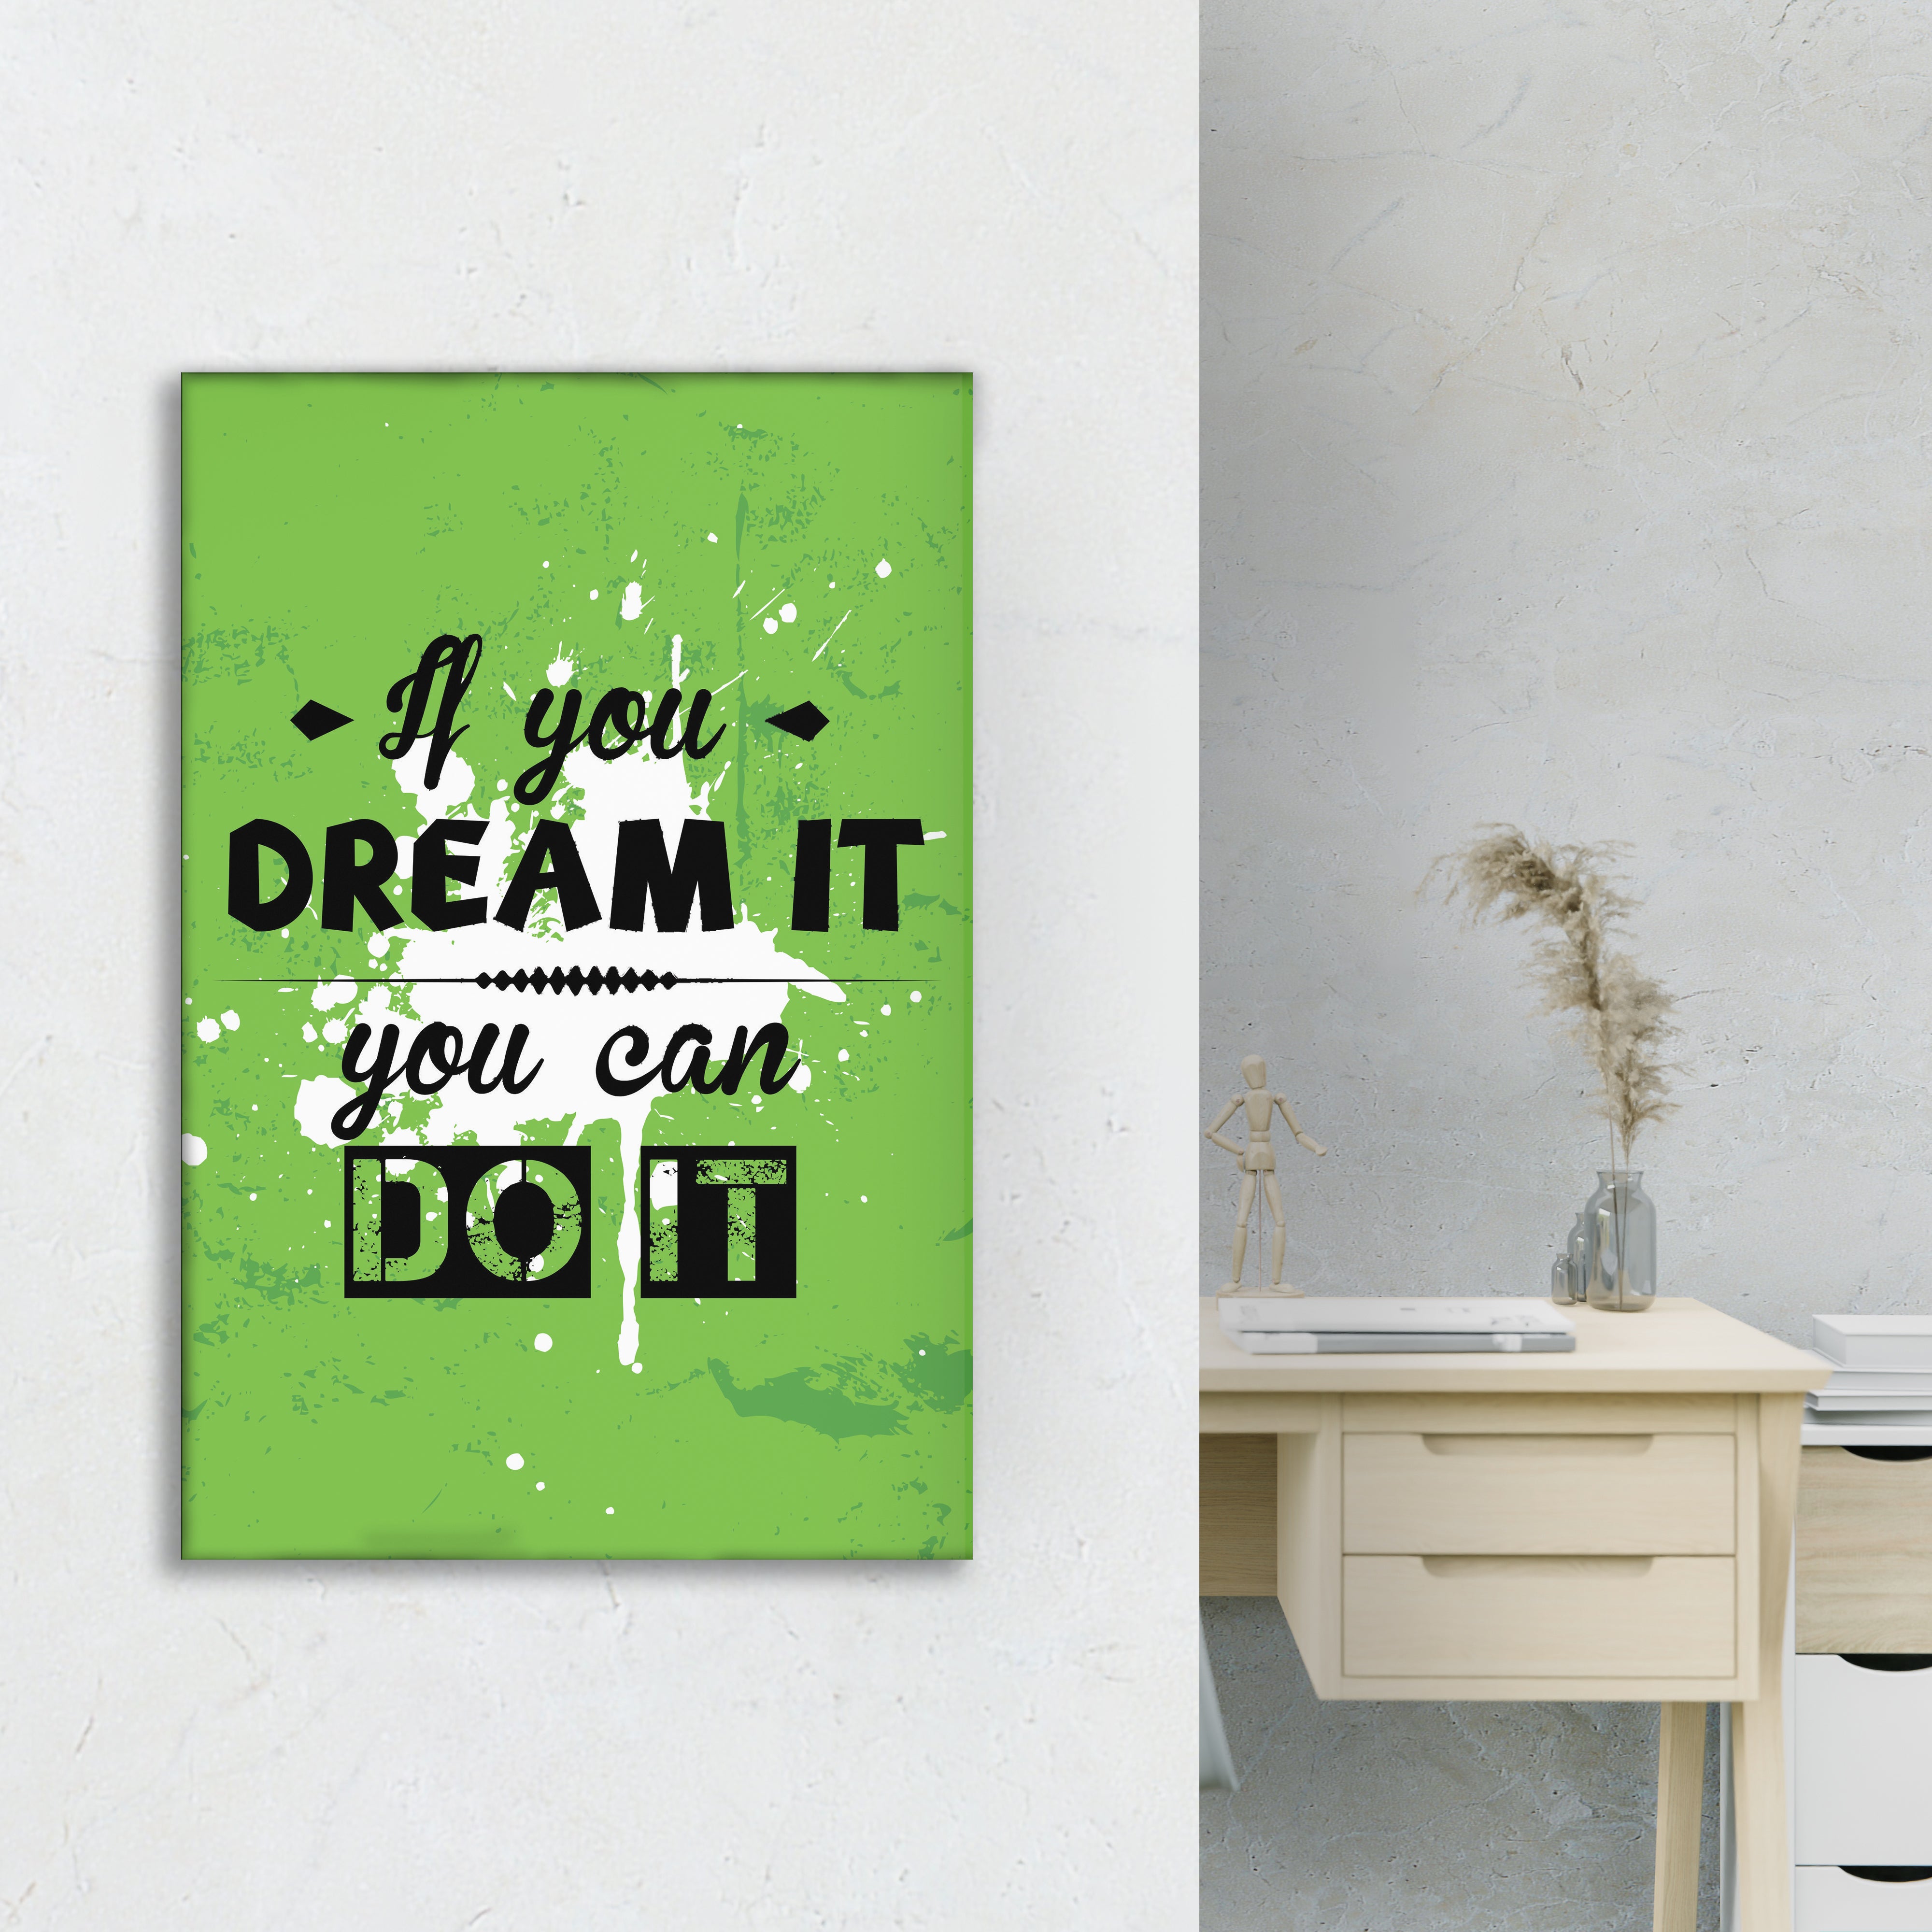 Dream IT - Motivational Quotes.